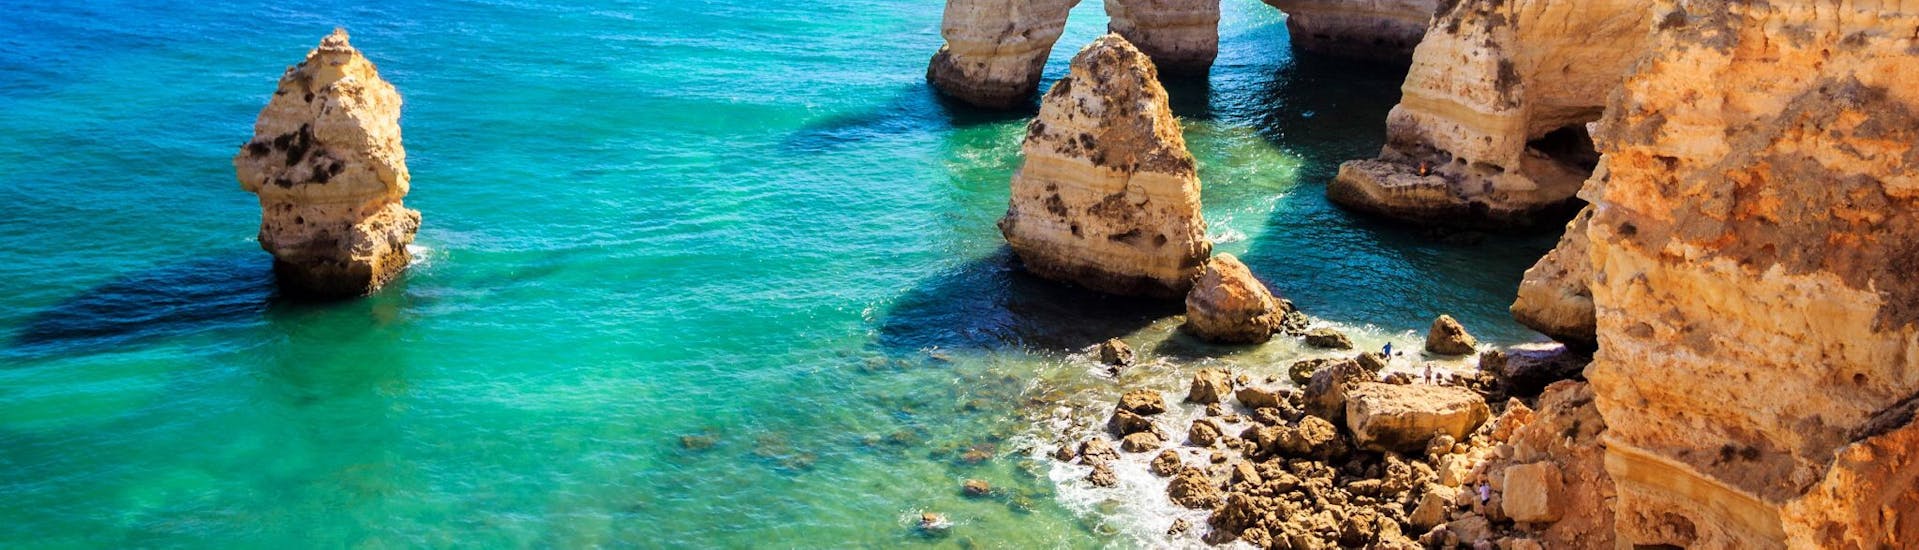 Picture of the wonderful Algarve coastline taken during a boat trip with Algarve Boa Vida Tours.